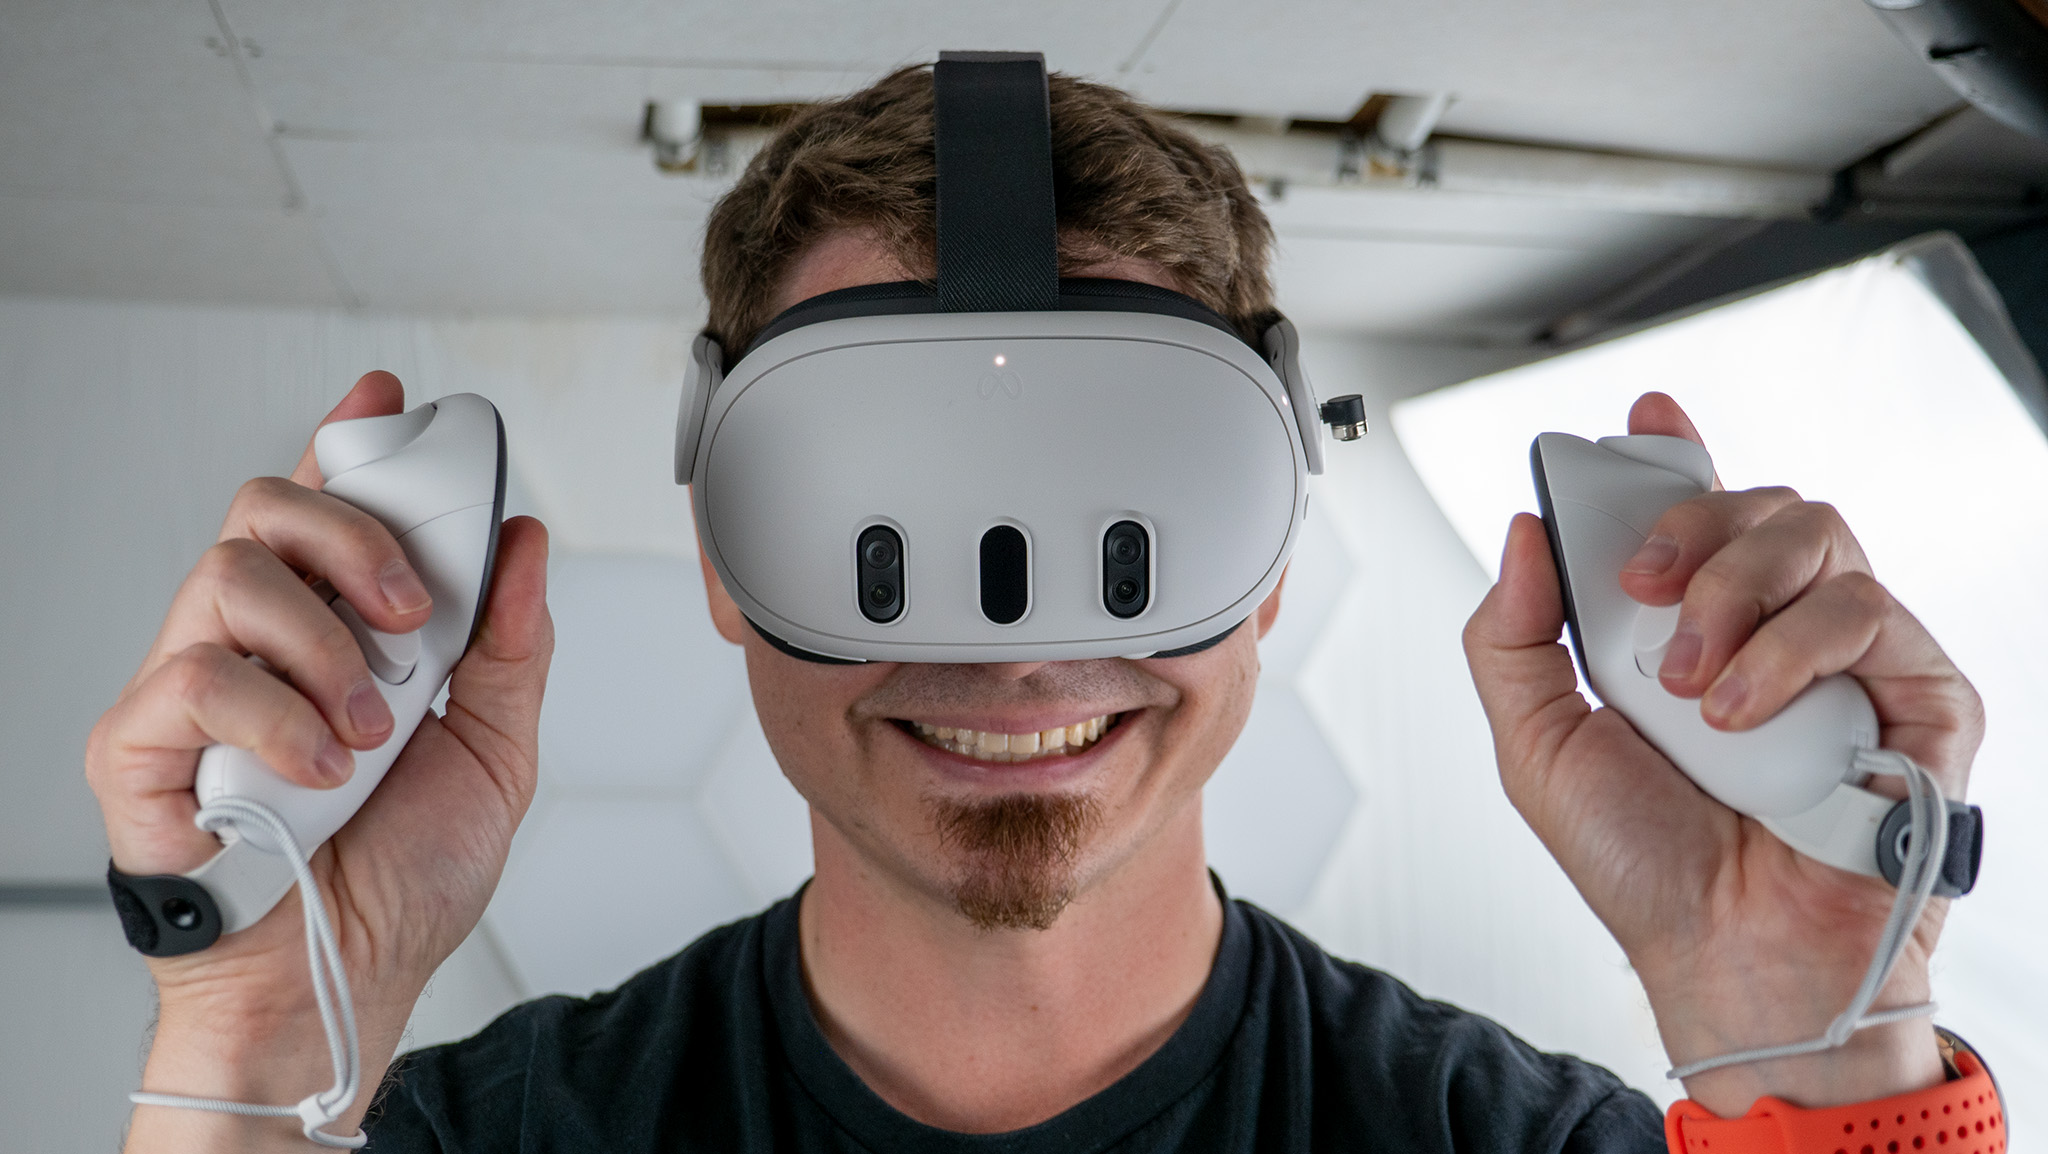 DIY bobovr quest 3 with Headphones : r/virtualreality